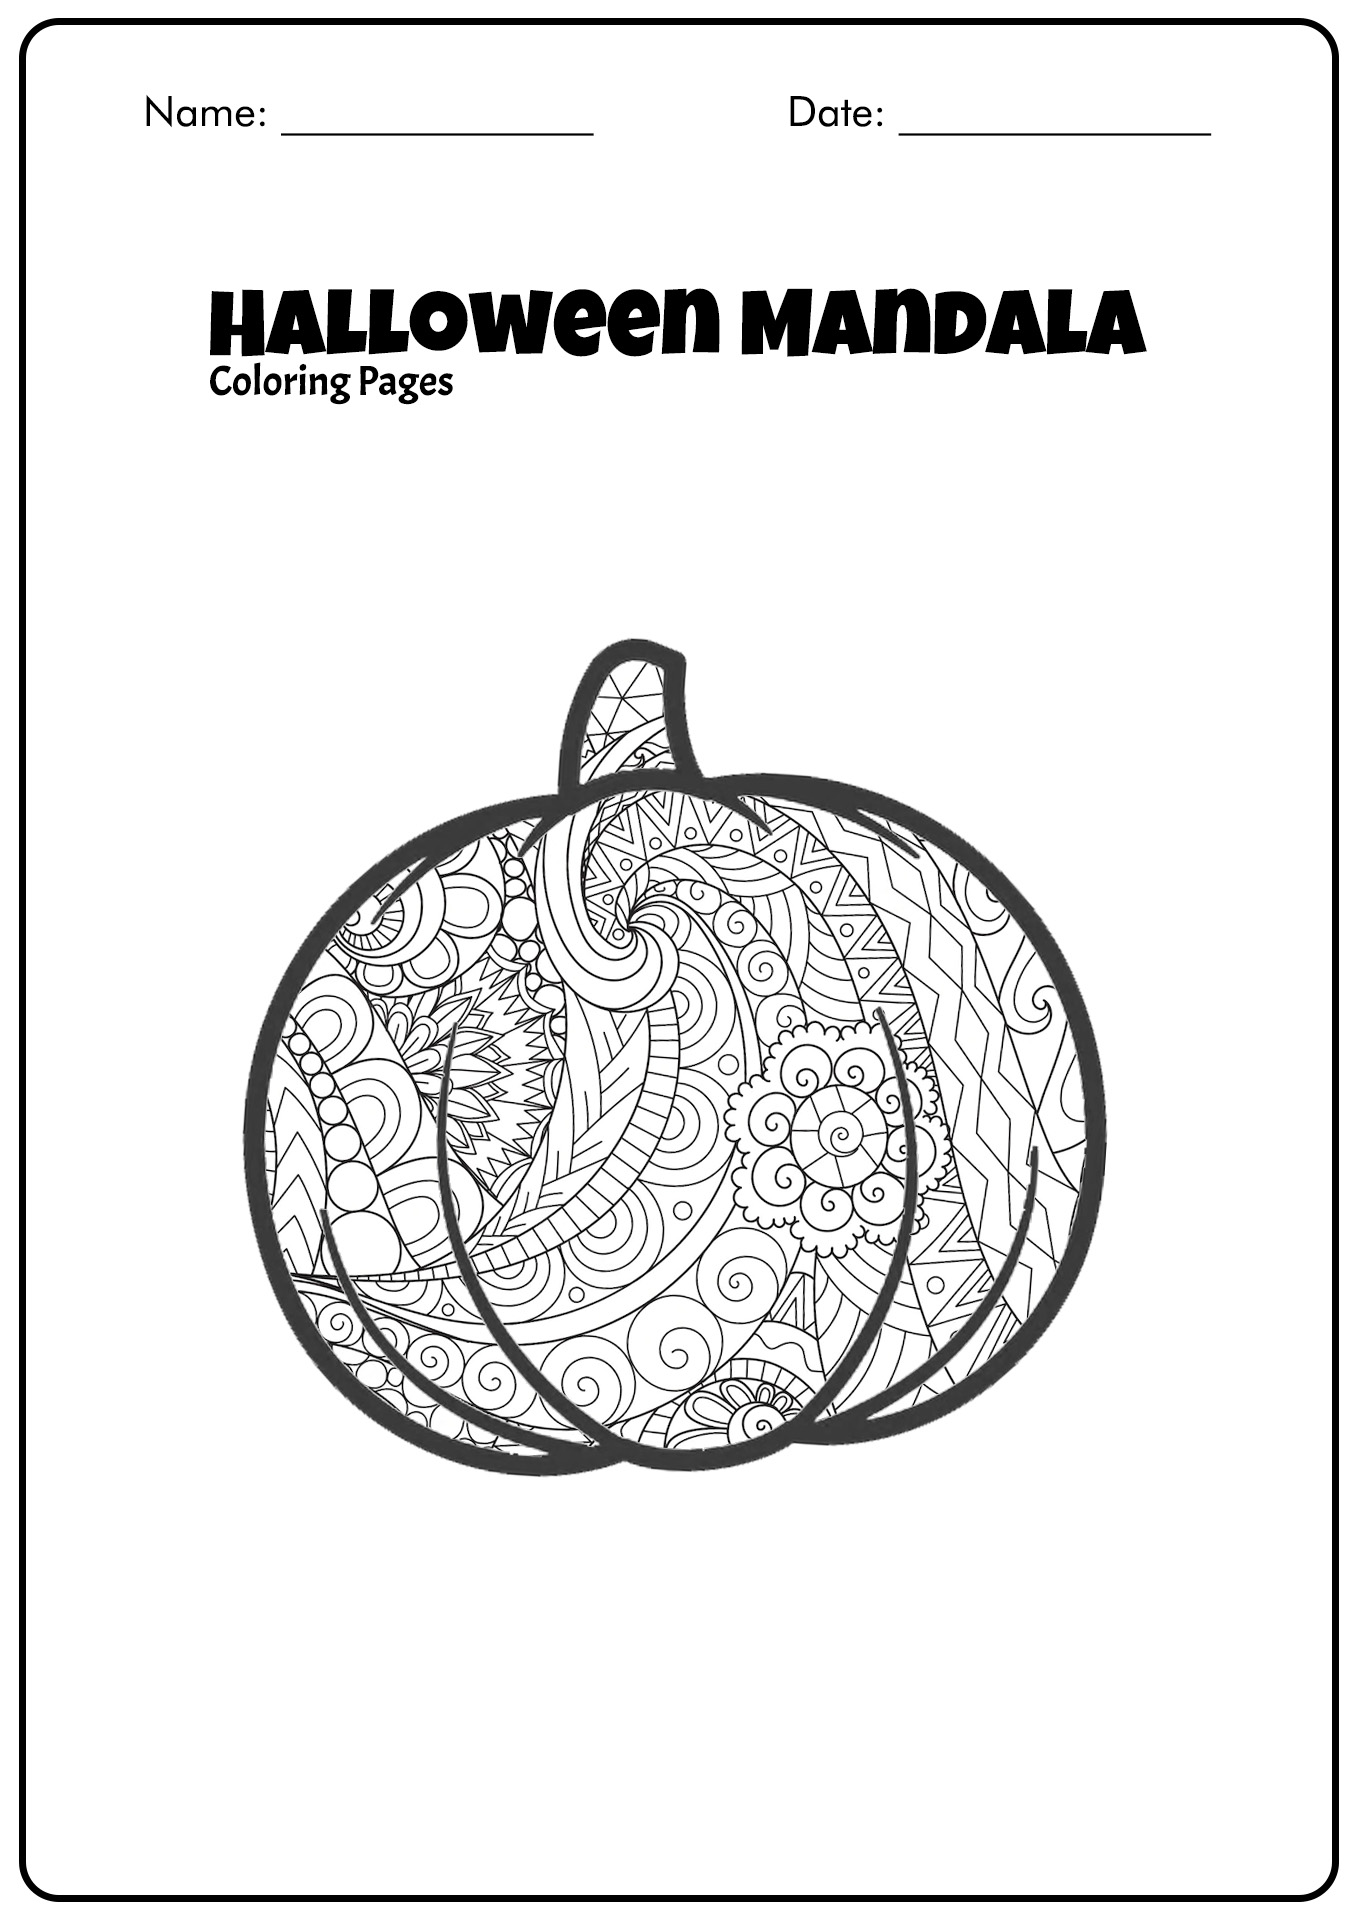 Halloween Mandala Coloring Pages Image